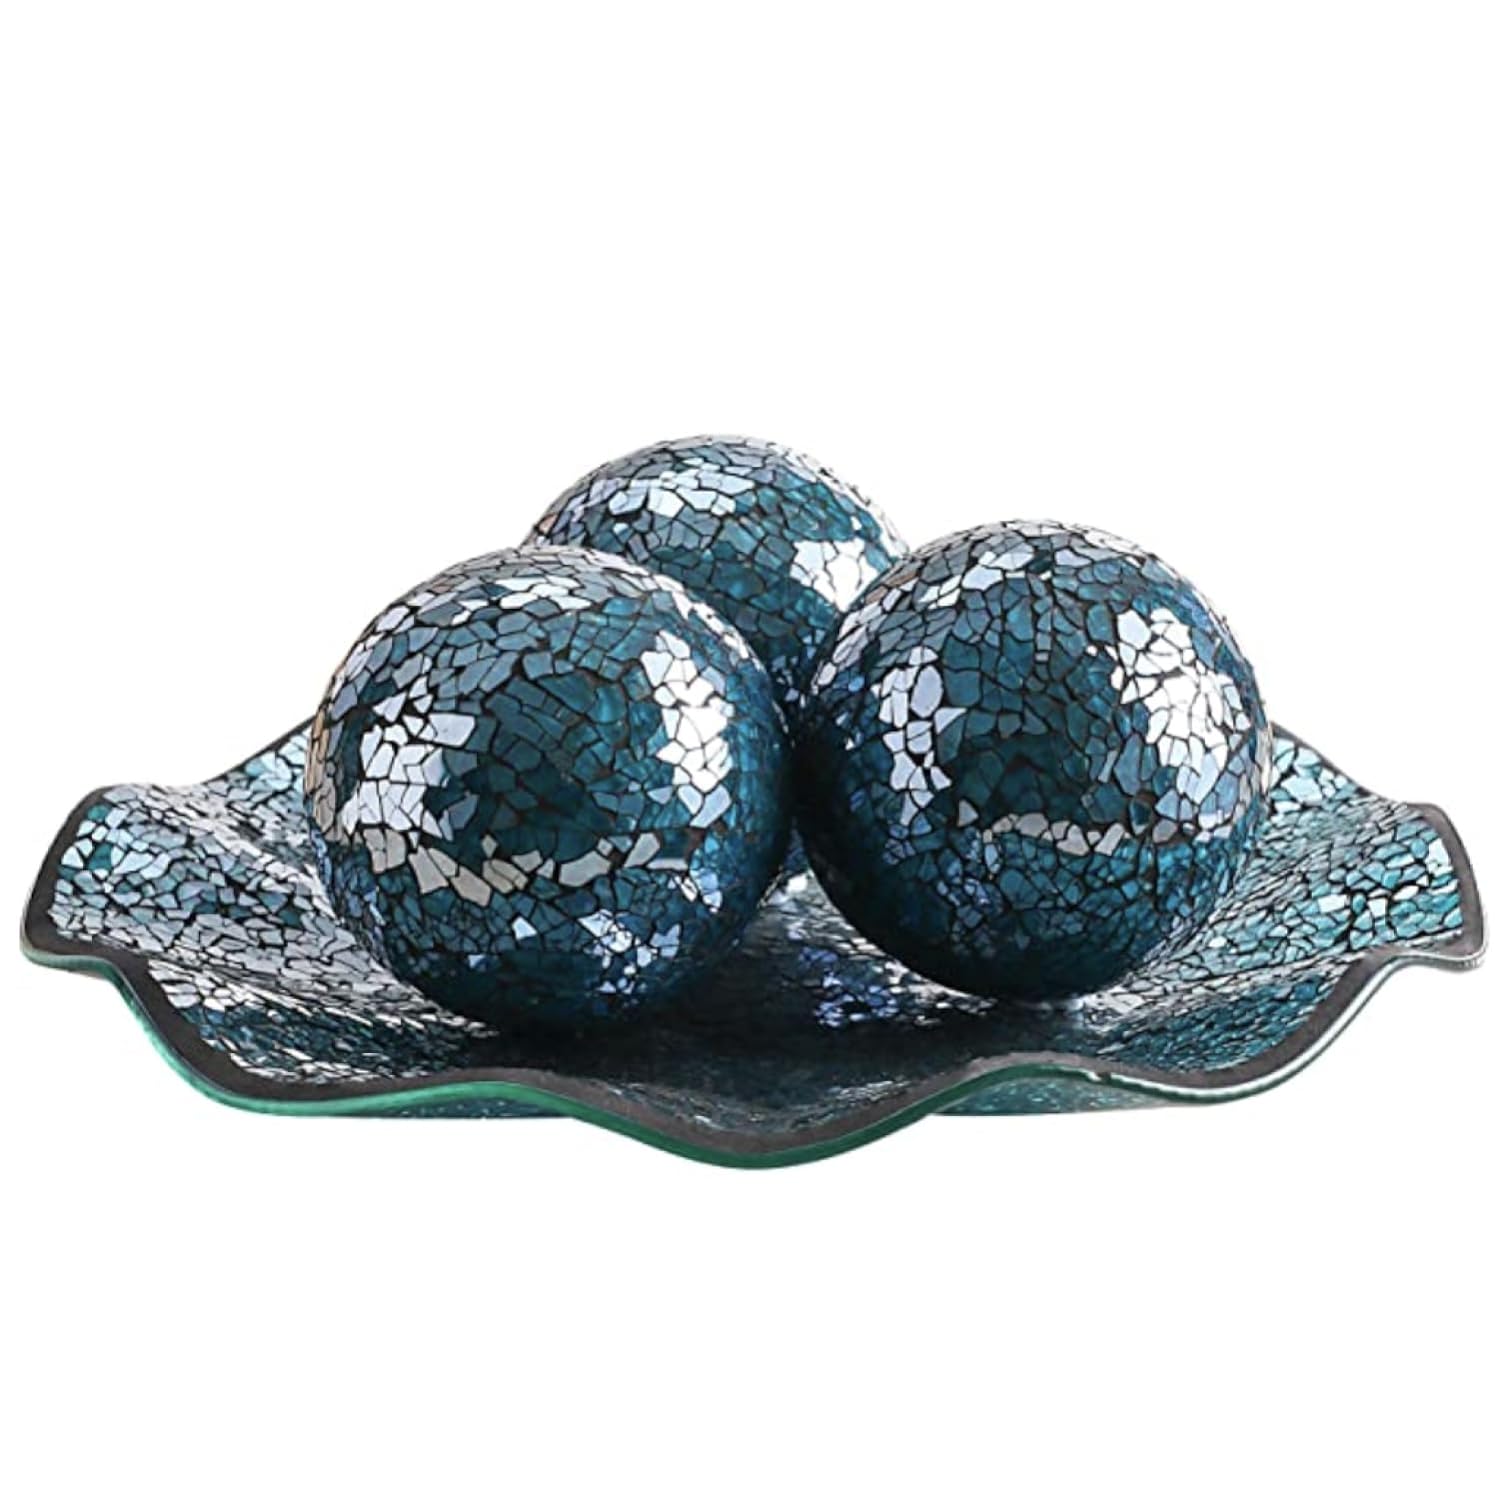 WHOLE HOUSEWARES | 11.5 Glass Mosaic Decorative Centerpiece Tray | Home Dcor Centerpiece Bowl | Bowl with 3PCS 3.75 Mosaic Decorative Balls Turquoise Decor